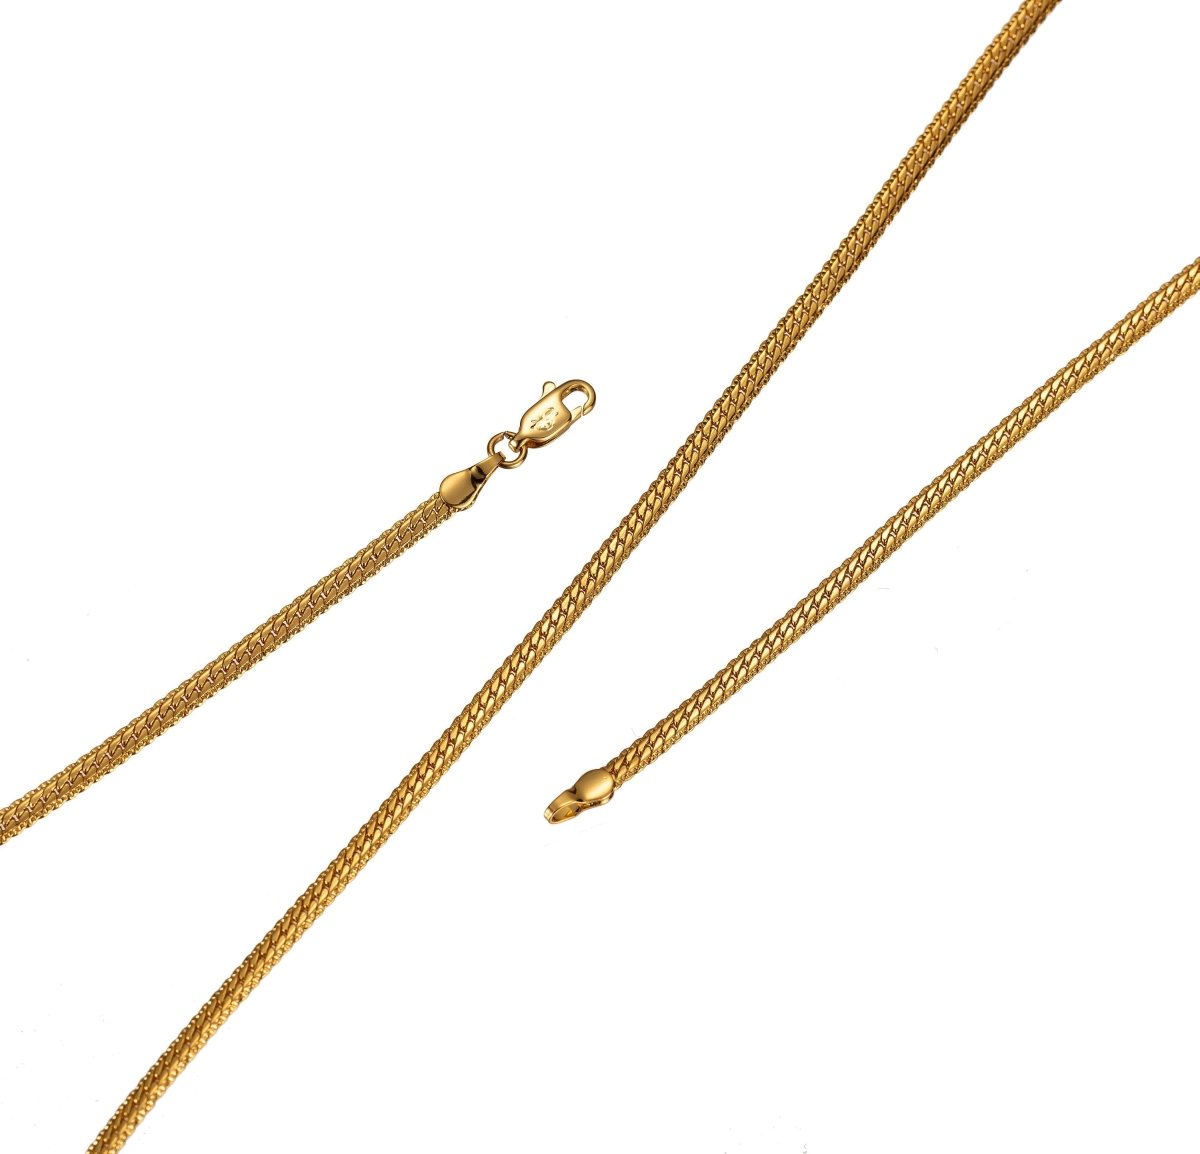 24K Gold Filled Herringbone Necklace - Dainty 2.3mm In Width - 17.7, 23.5 Inches Herringbone Necklace w/ Lobster Clasps | CN-418, CN-526 - DLUXCA